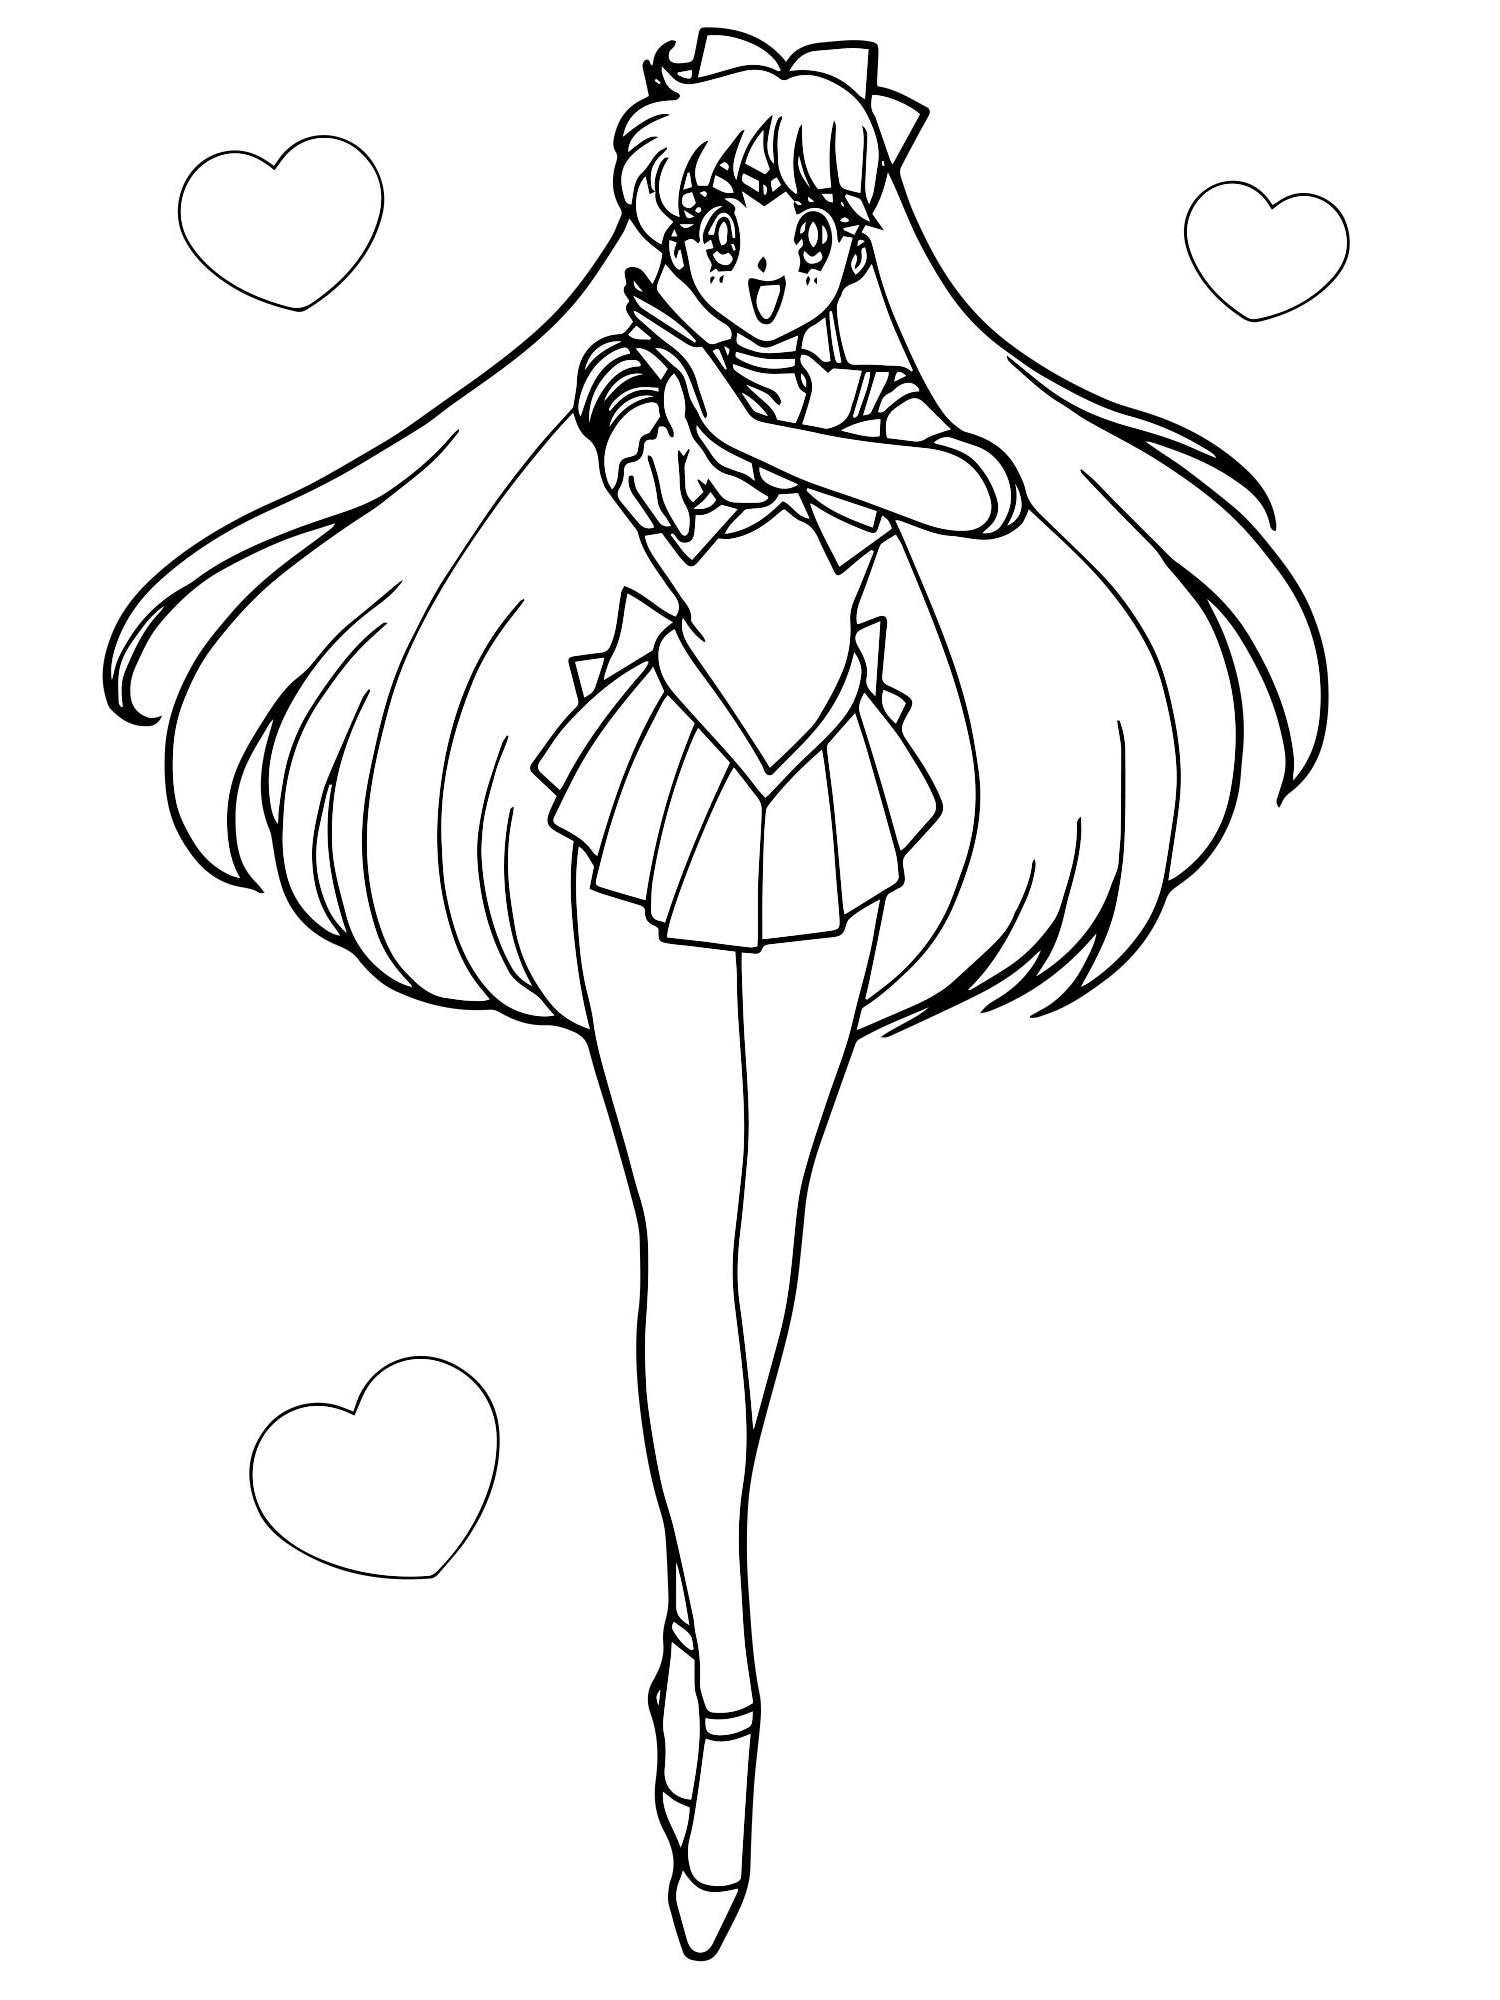 Раскраски СМ | VK | Sailor moon coloring pages, Chibi coloring pages, Sailor chibi moon